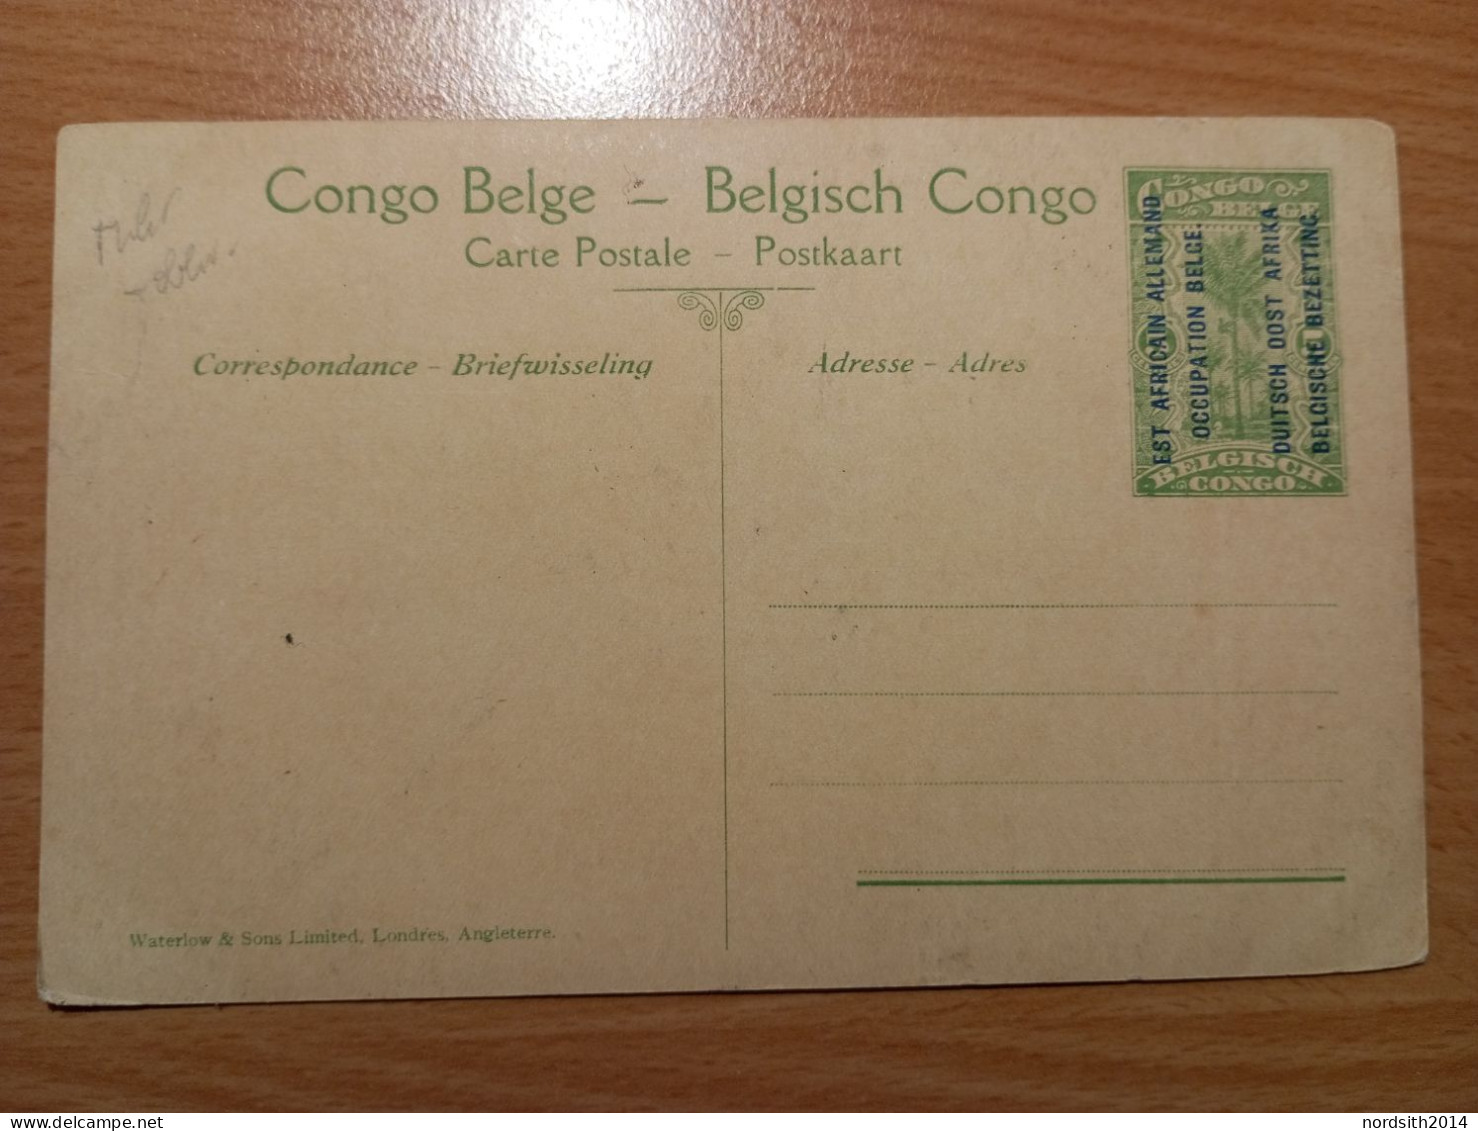 Congo Belge - Katanga - Photo Force Publique - Abl - Abbl - 07 - Congo Belge